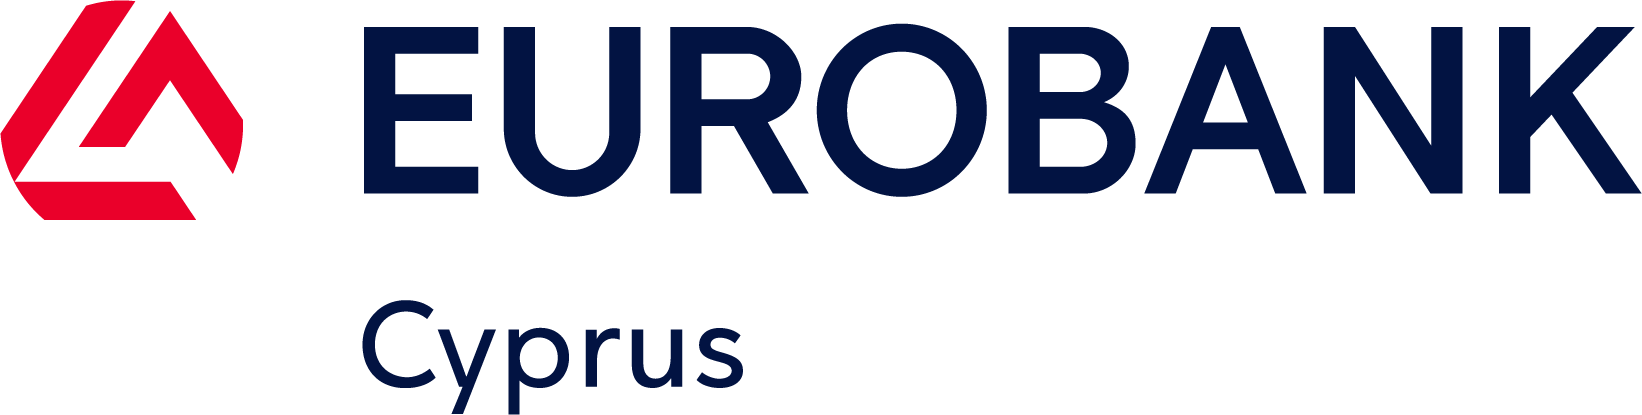 Eurobank-Cyprus-RGB.png